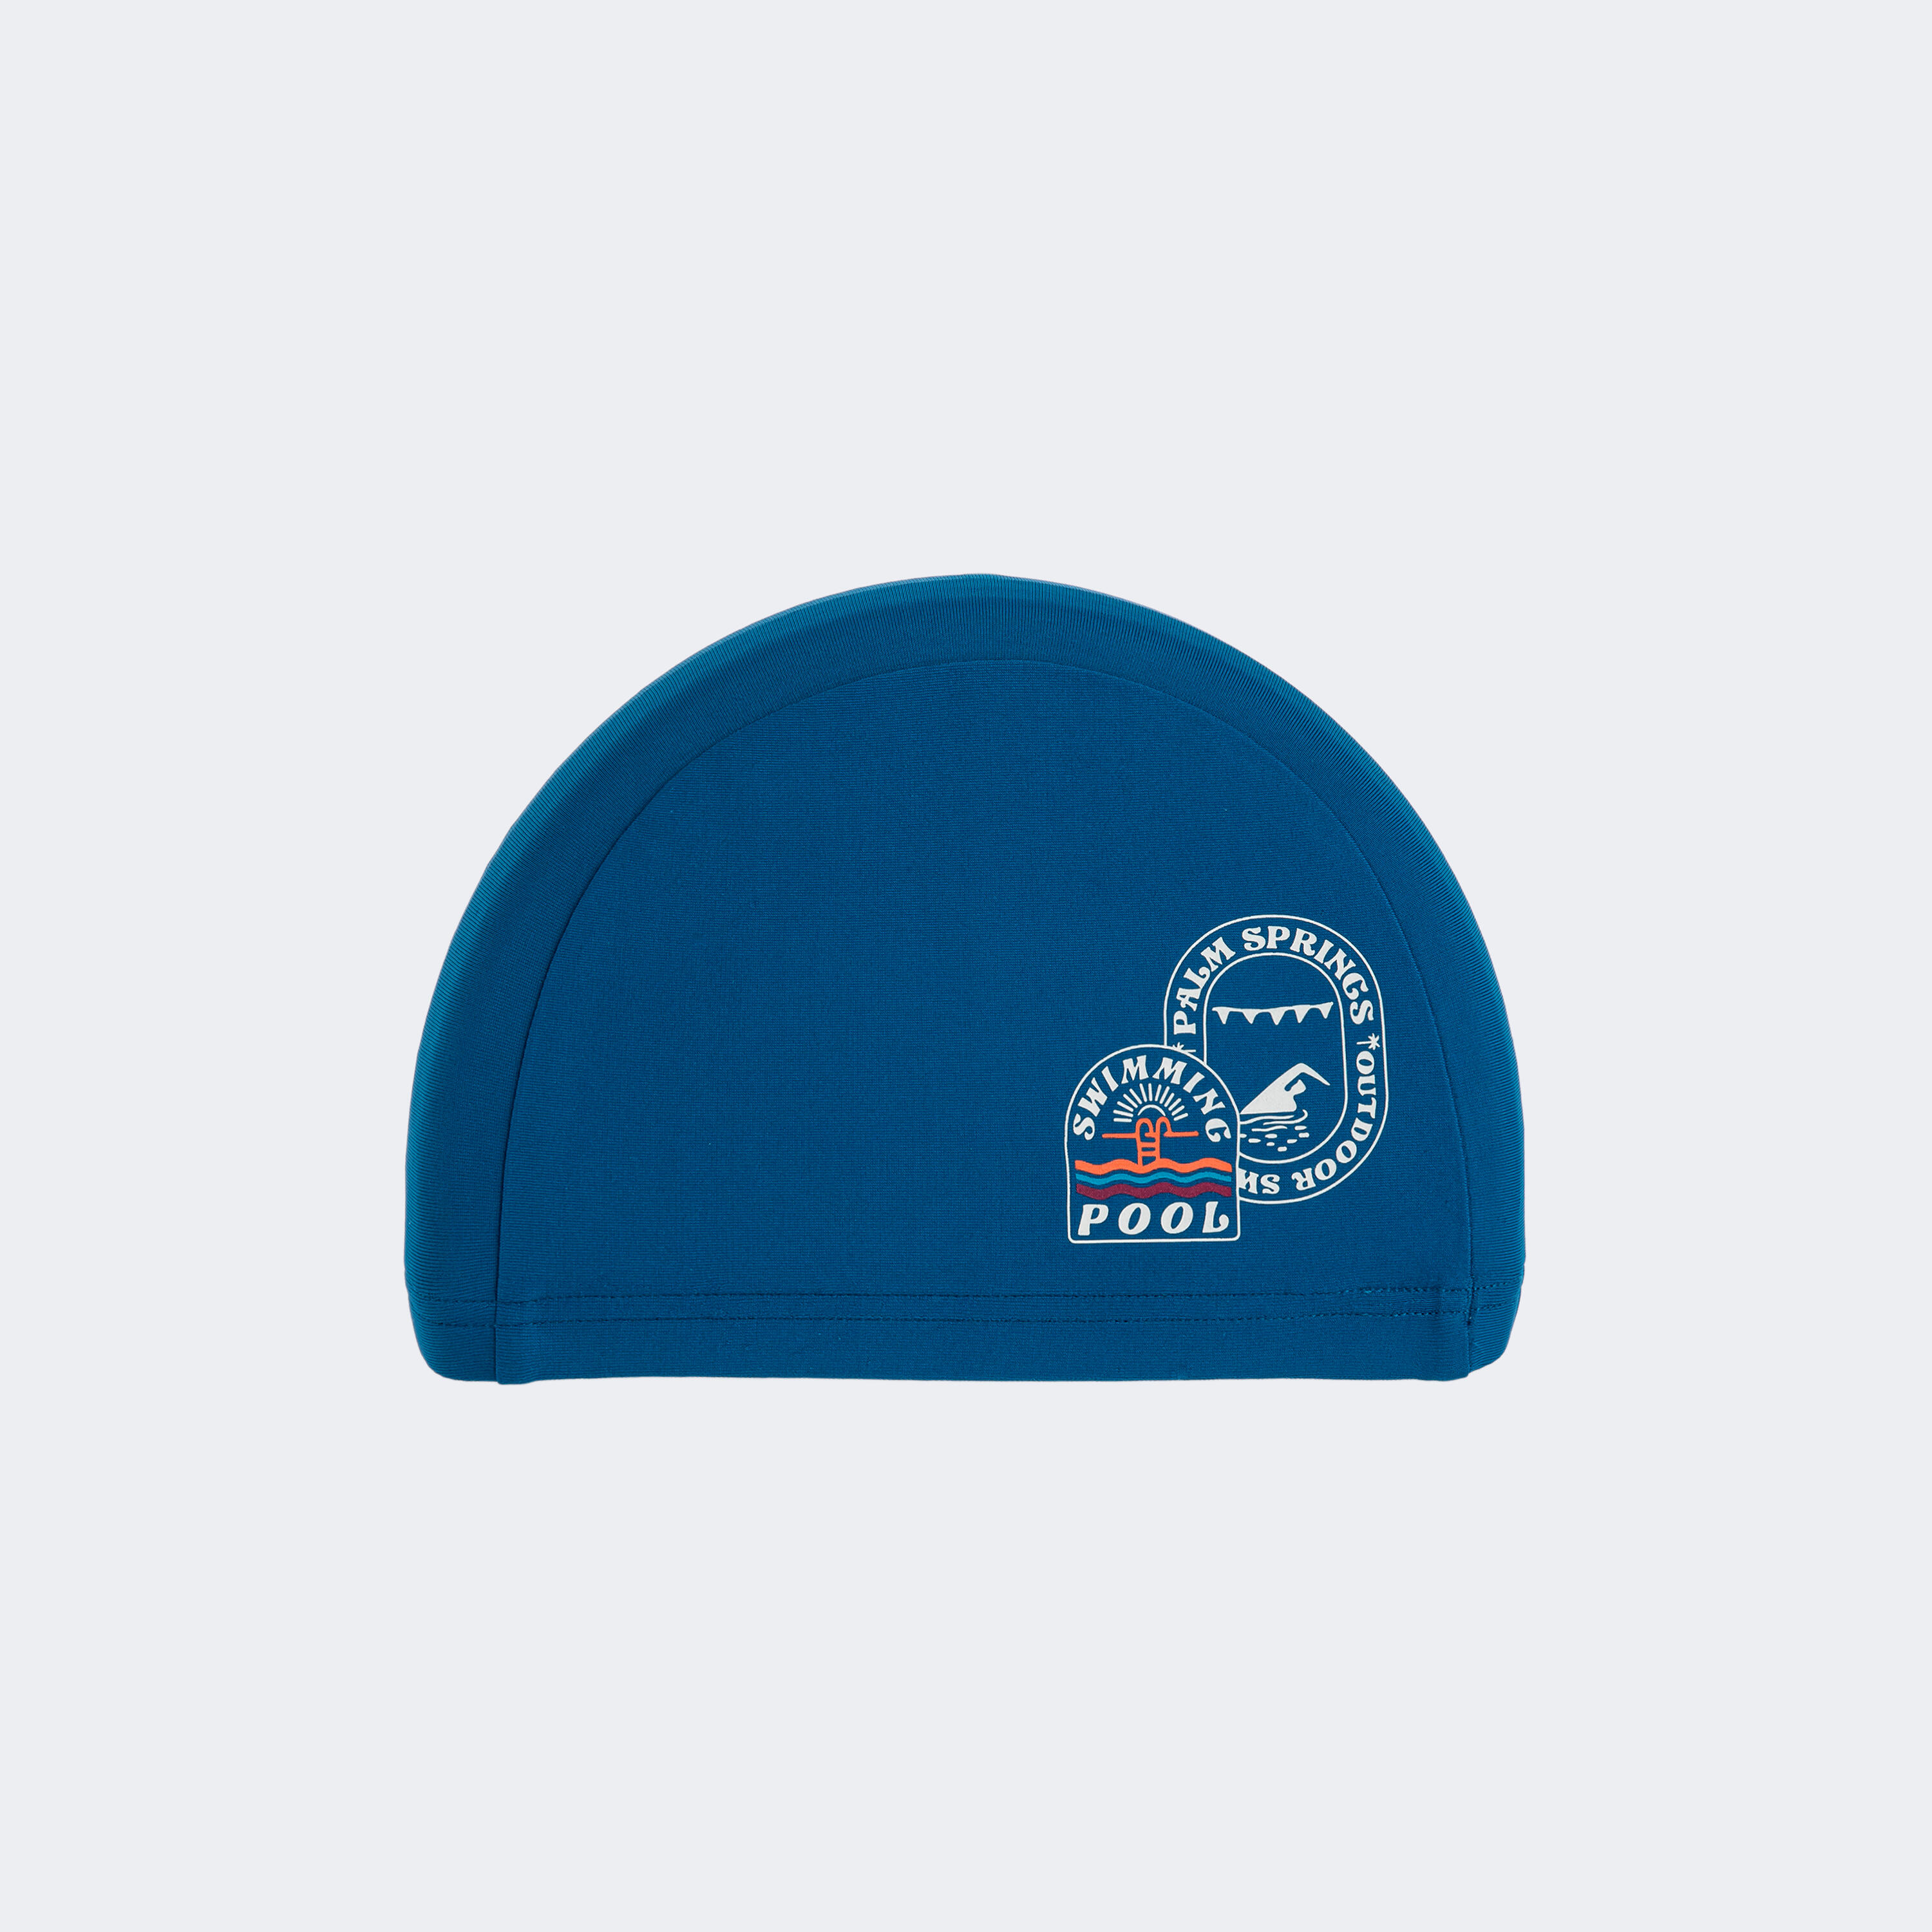 NABAIJI Mesh swim cap - Printed fabric - Size S - Blue patch